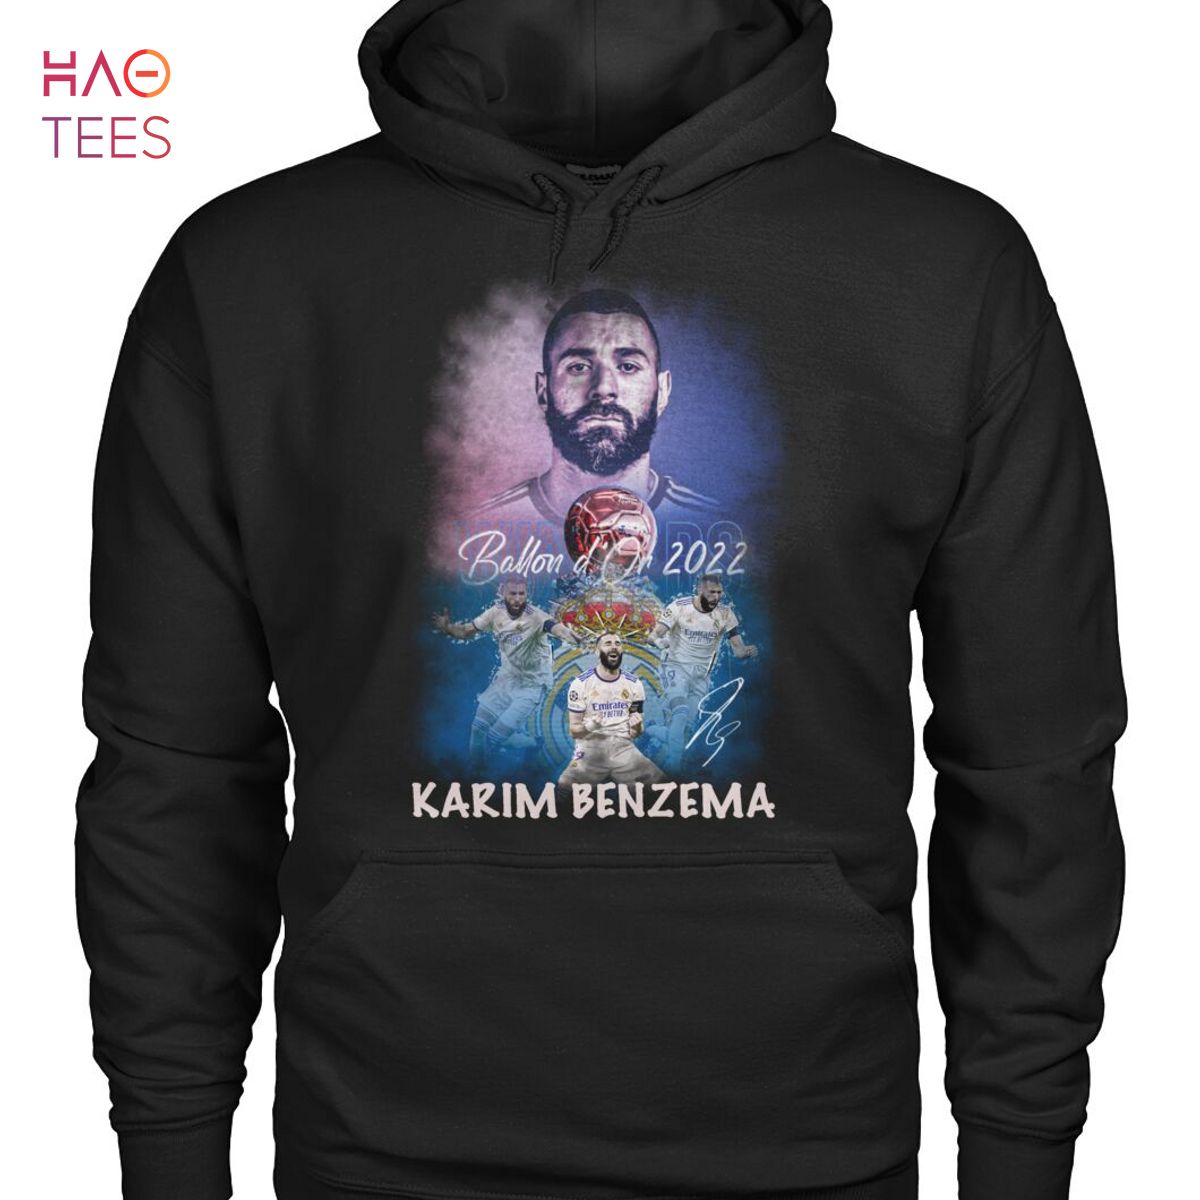 HOT Karim Benzema Shirt Limited Edition